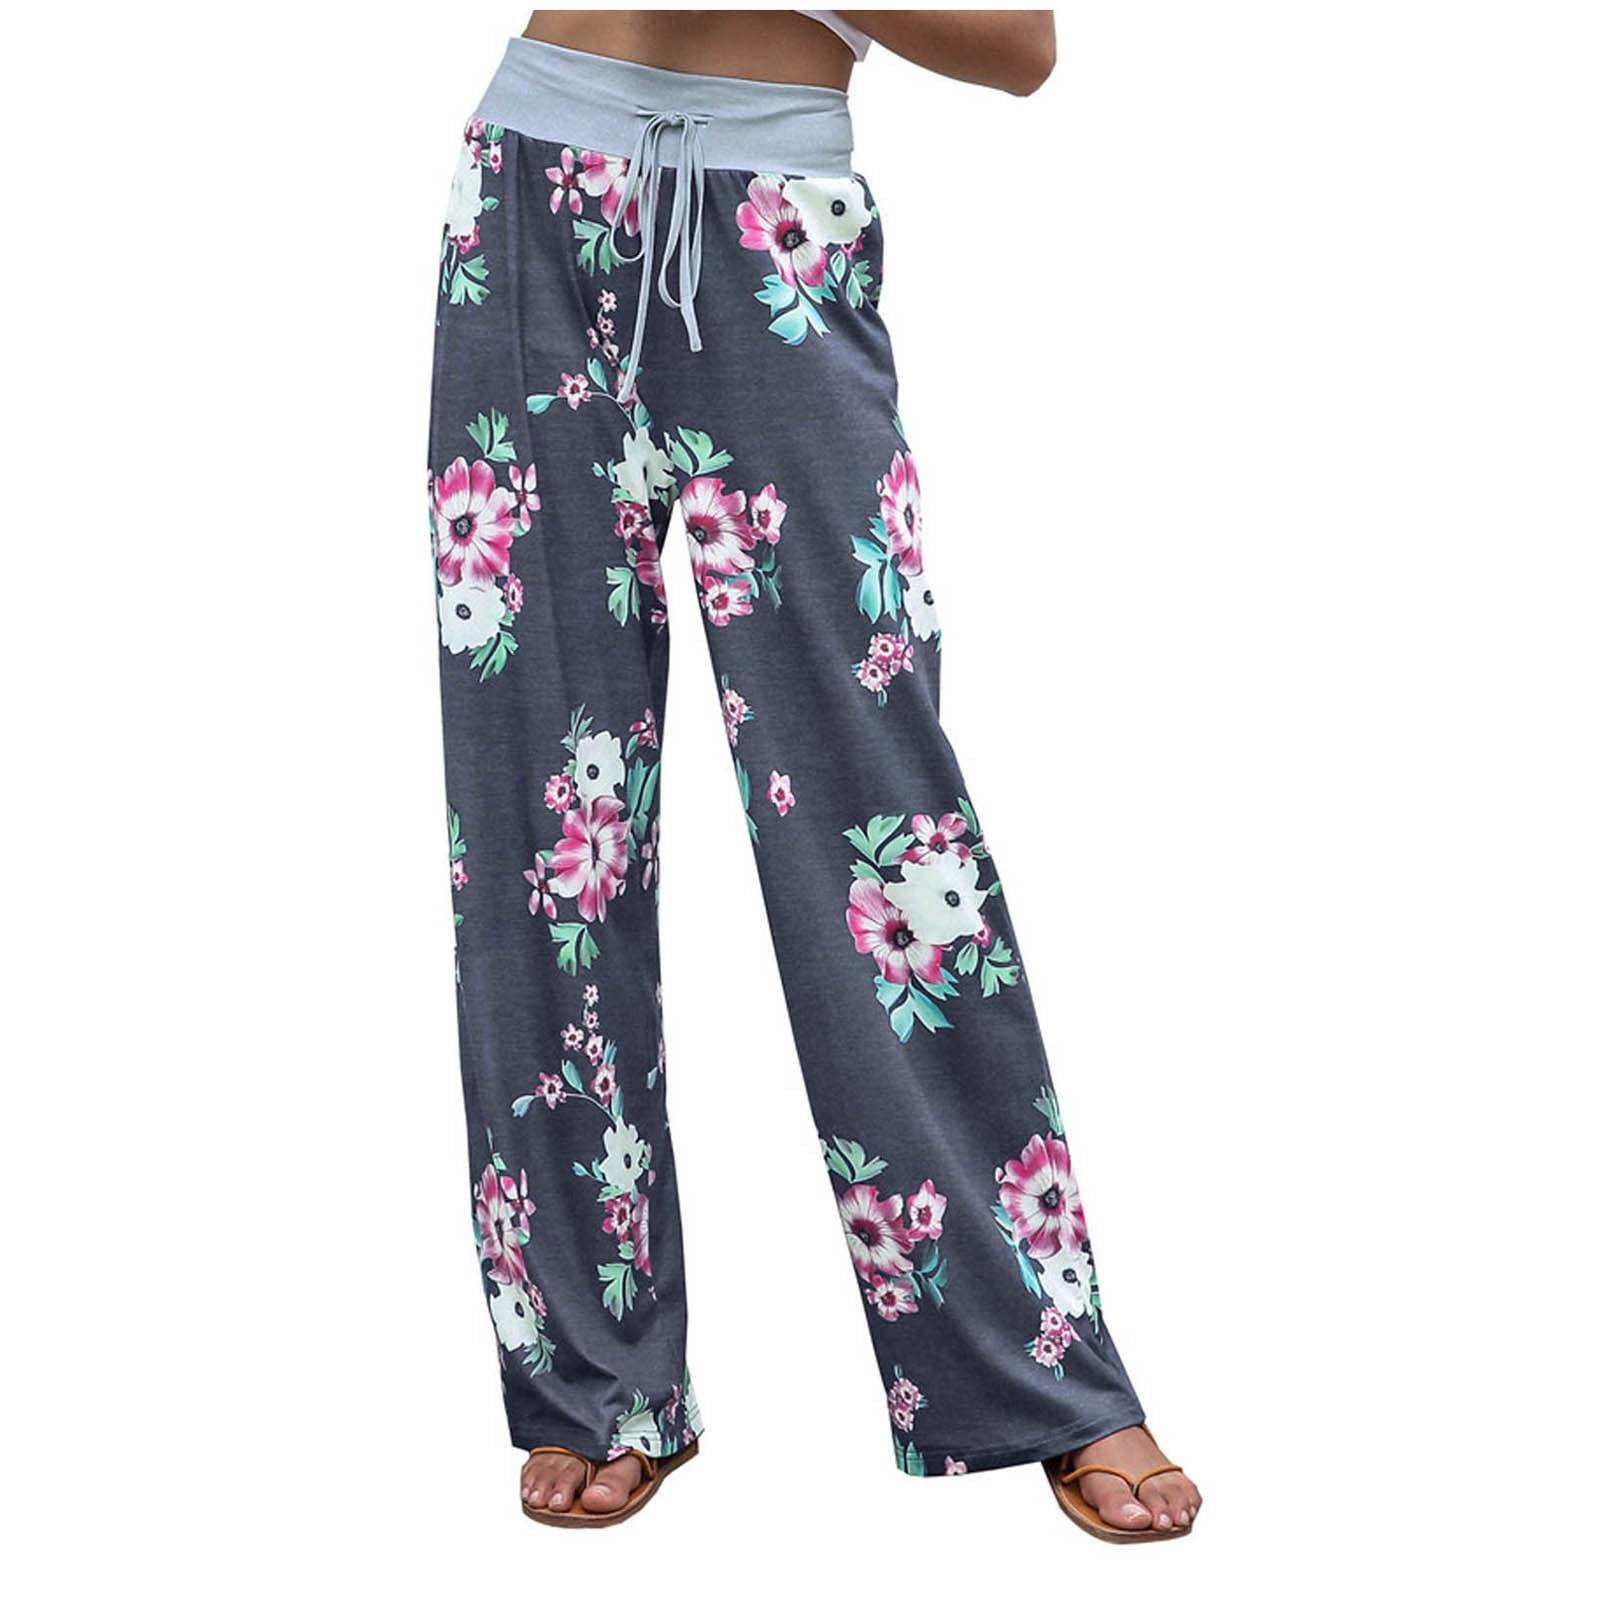 Jo & Bette Women's Plush Pajama Lounge Pants, PJ Sleep Pants